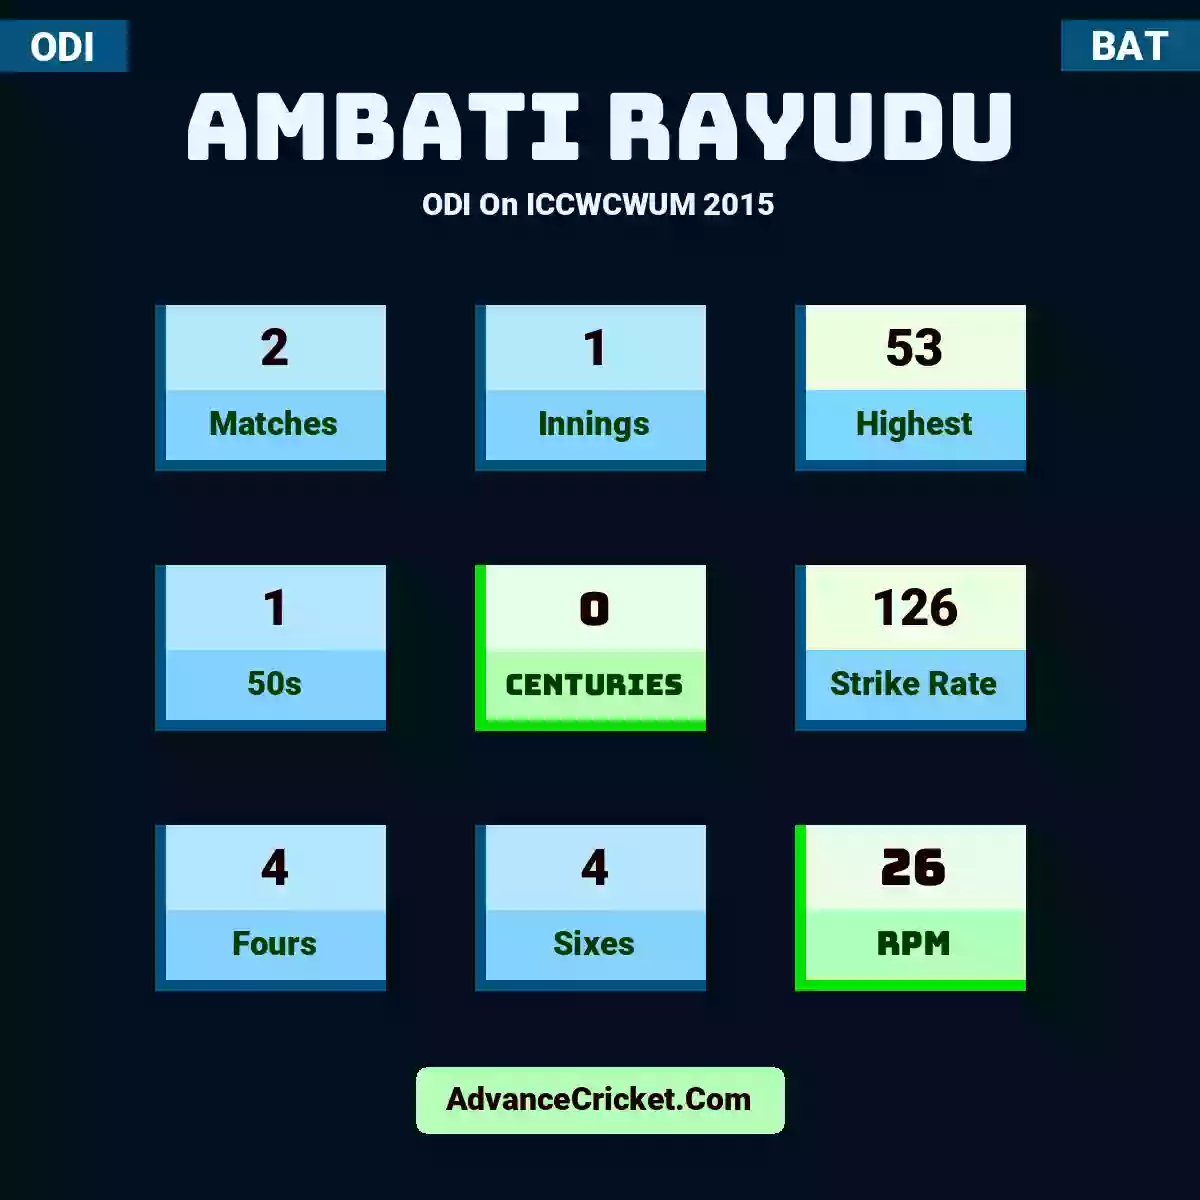 Ambati Rayudu ODI  On ICCWCWUM 2015, Ambati Rayudu played 2 matches, scored 53 runs as highest, 1 half-centuries, and 0 centuries, with a strike rate of 126. A.Rayudu hit 4 fours and 4 sixes, with an RPM of 26.